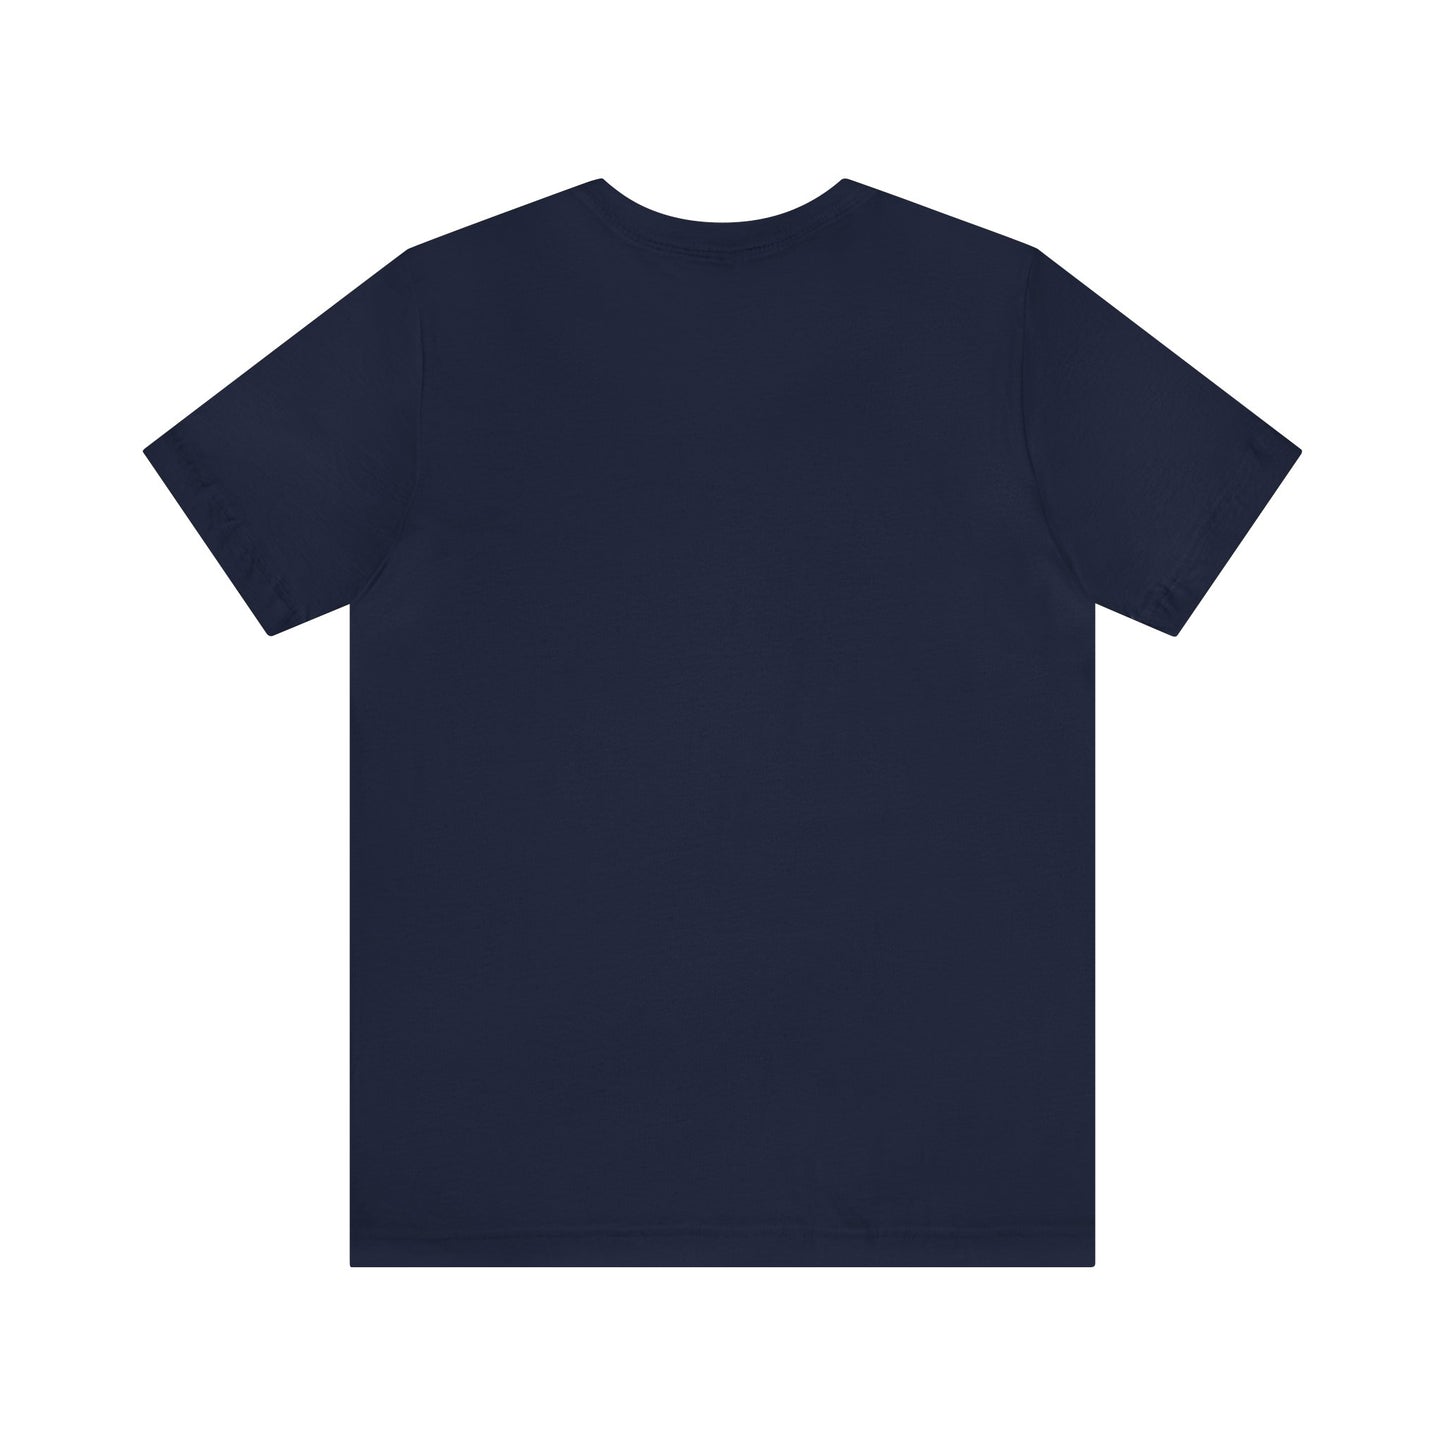 Dusturm ASD T-Shirt